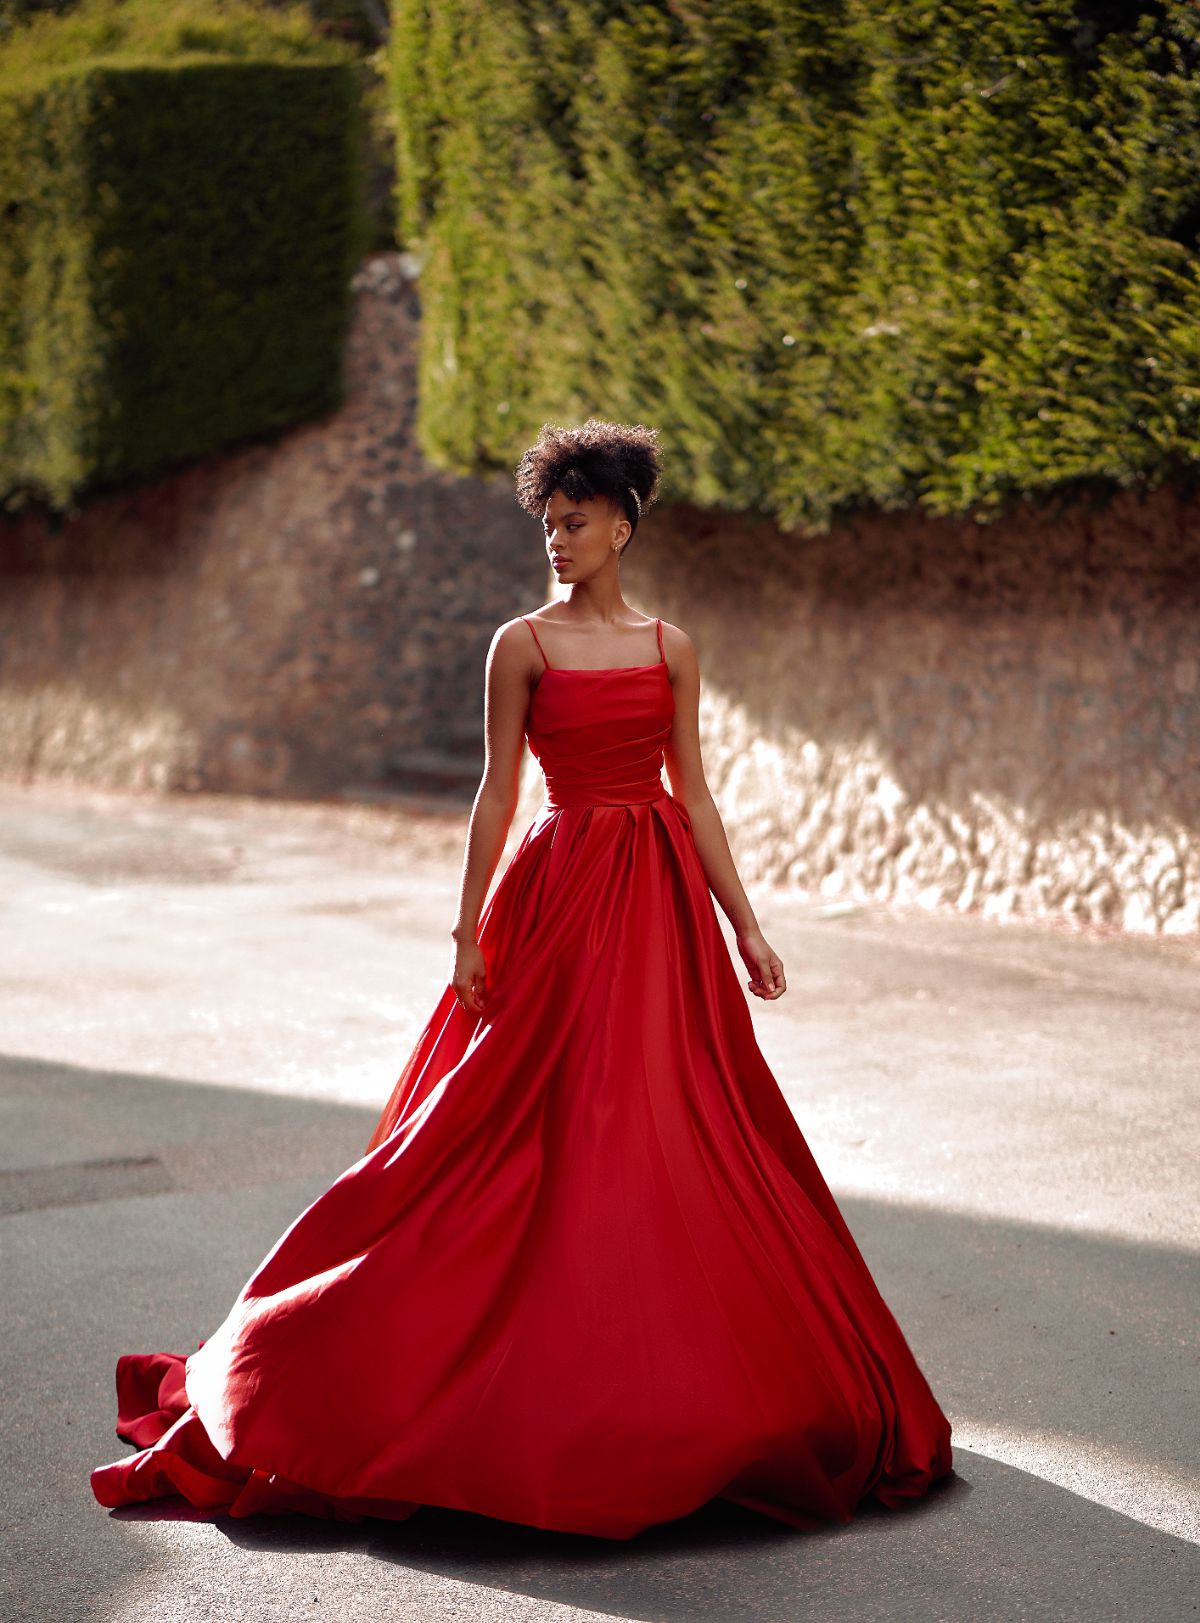 Best Dress 2 Impress Bridal-Image-76